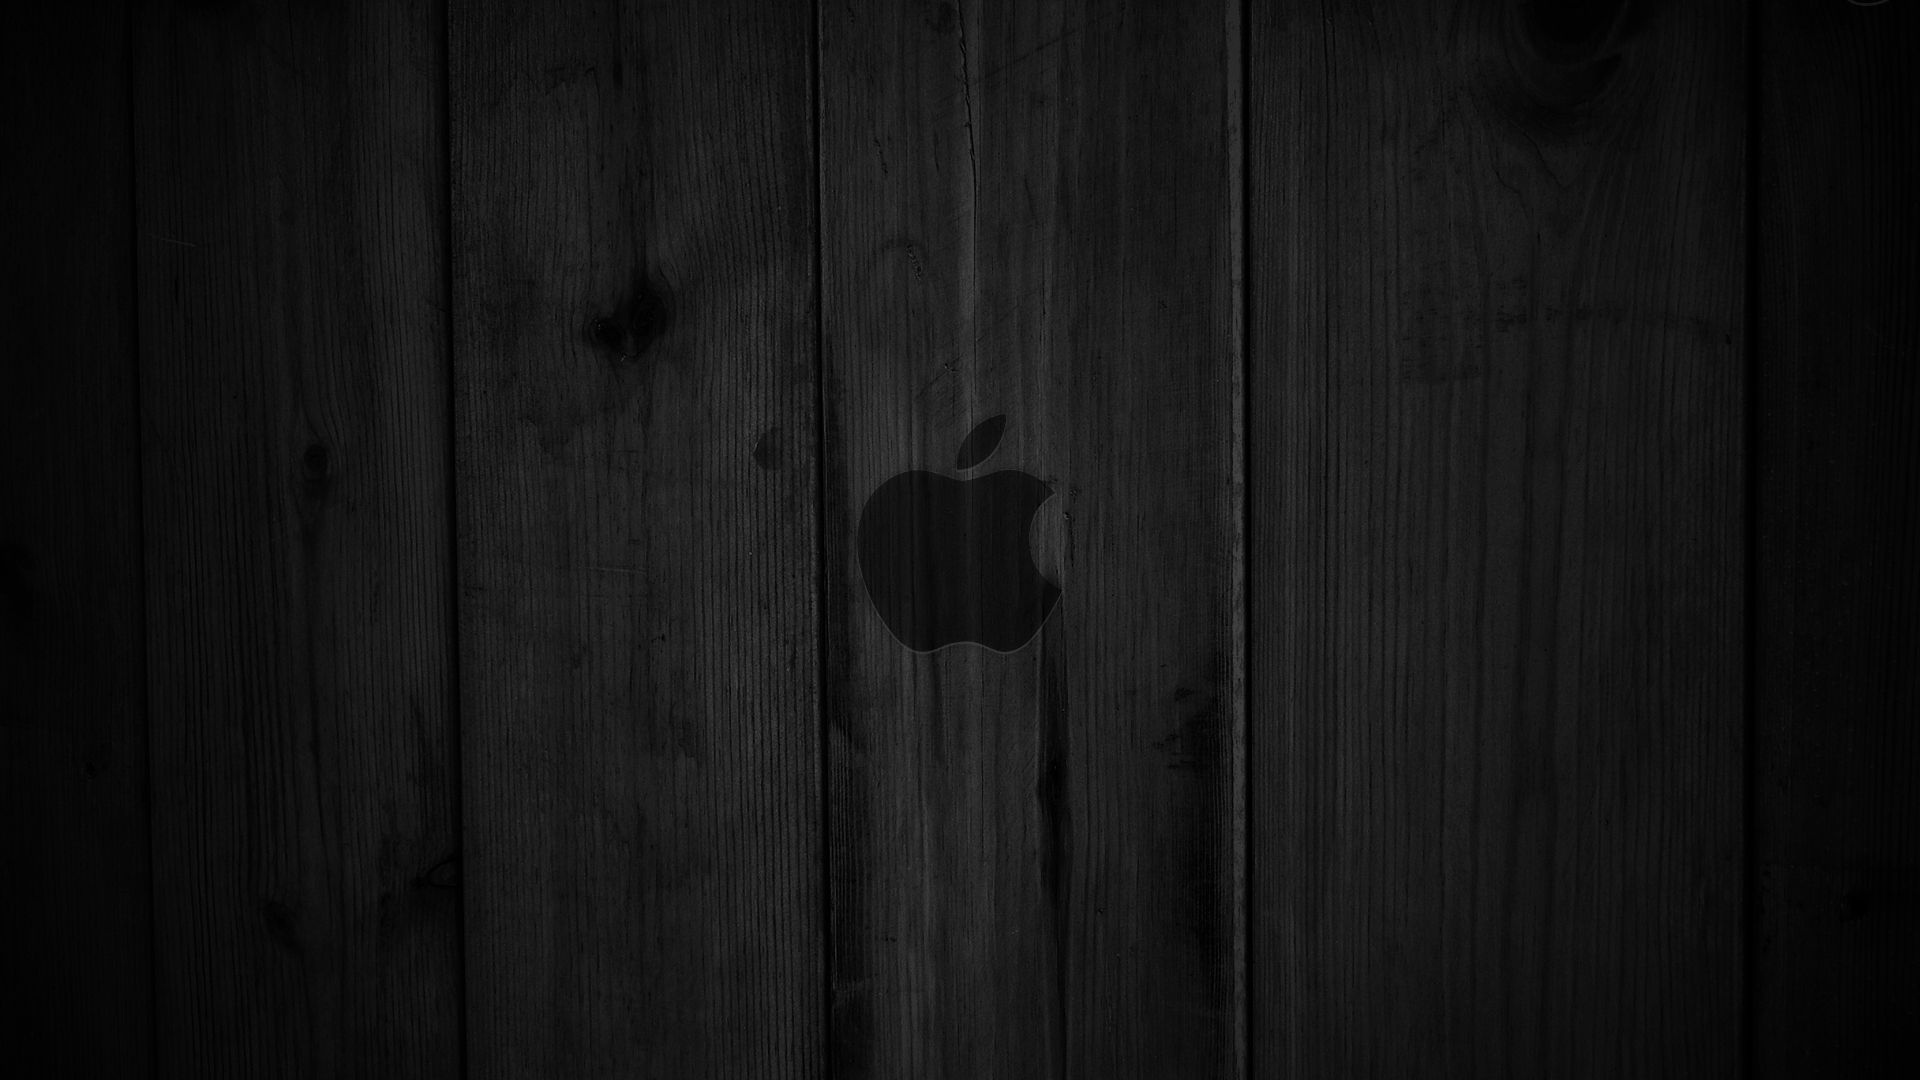 Dark wood OS X Apple wallpaper - High Definition, High ...